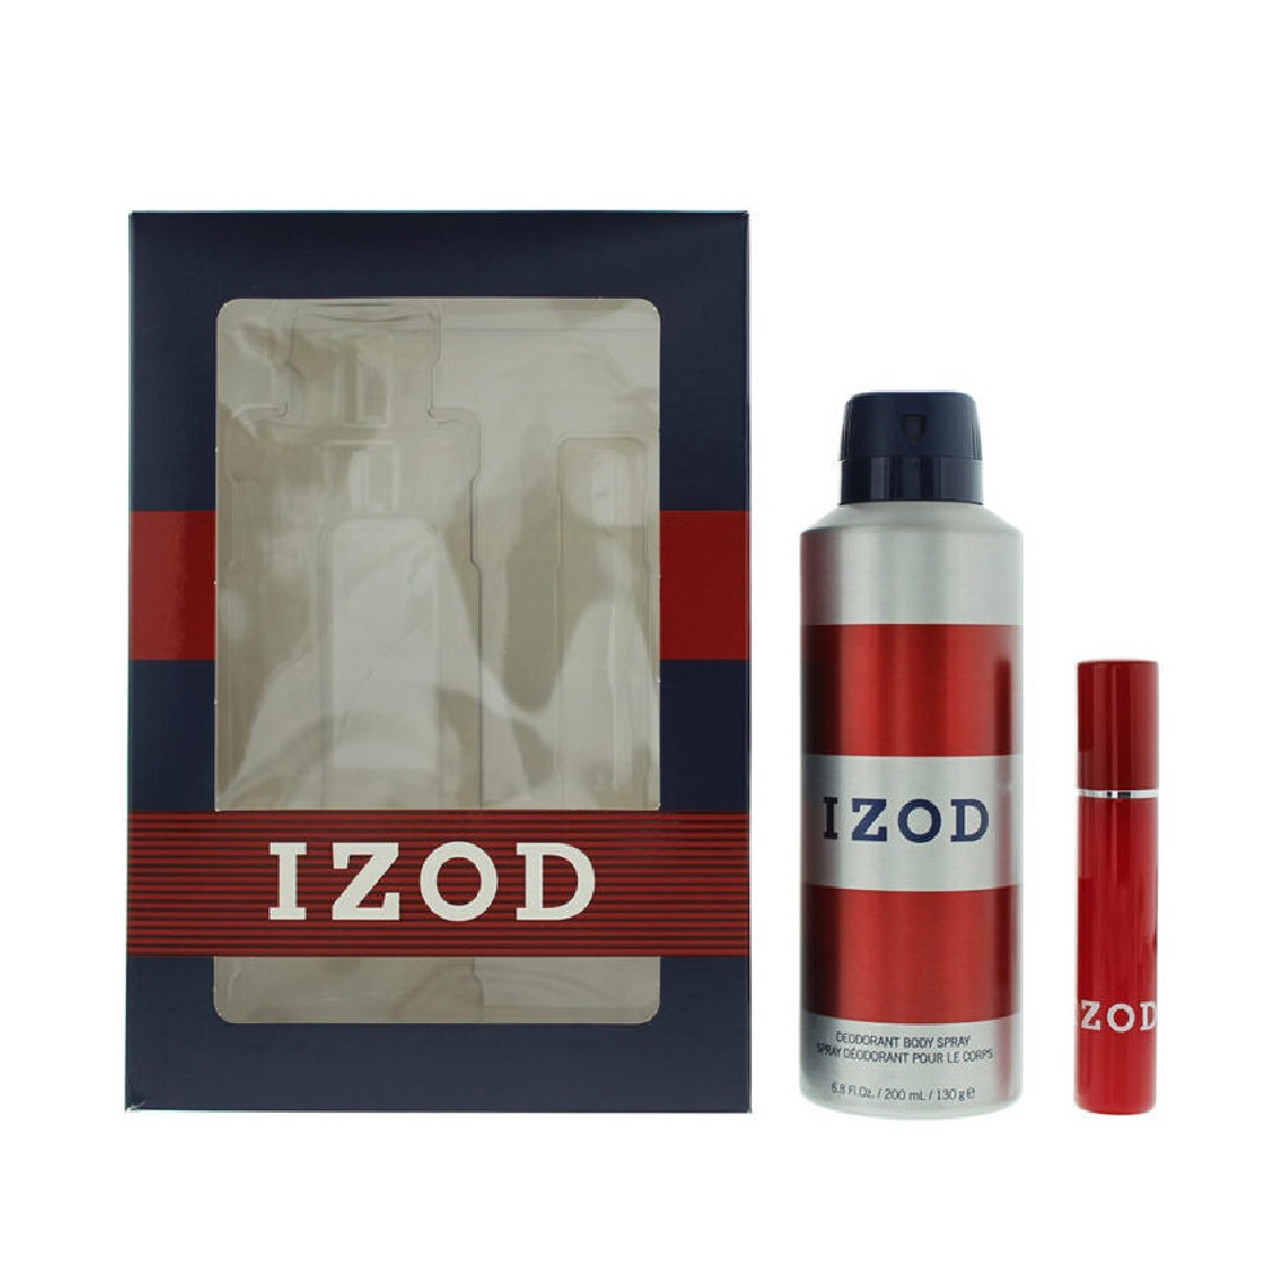 IZOD RED 2 PCS GIFT SET FOR MEN: 0.5 EAU DE TOILETTE TRAVEL SPRAY + 6.8  BODY SPRAY - Nandansons International Inc.